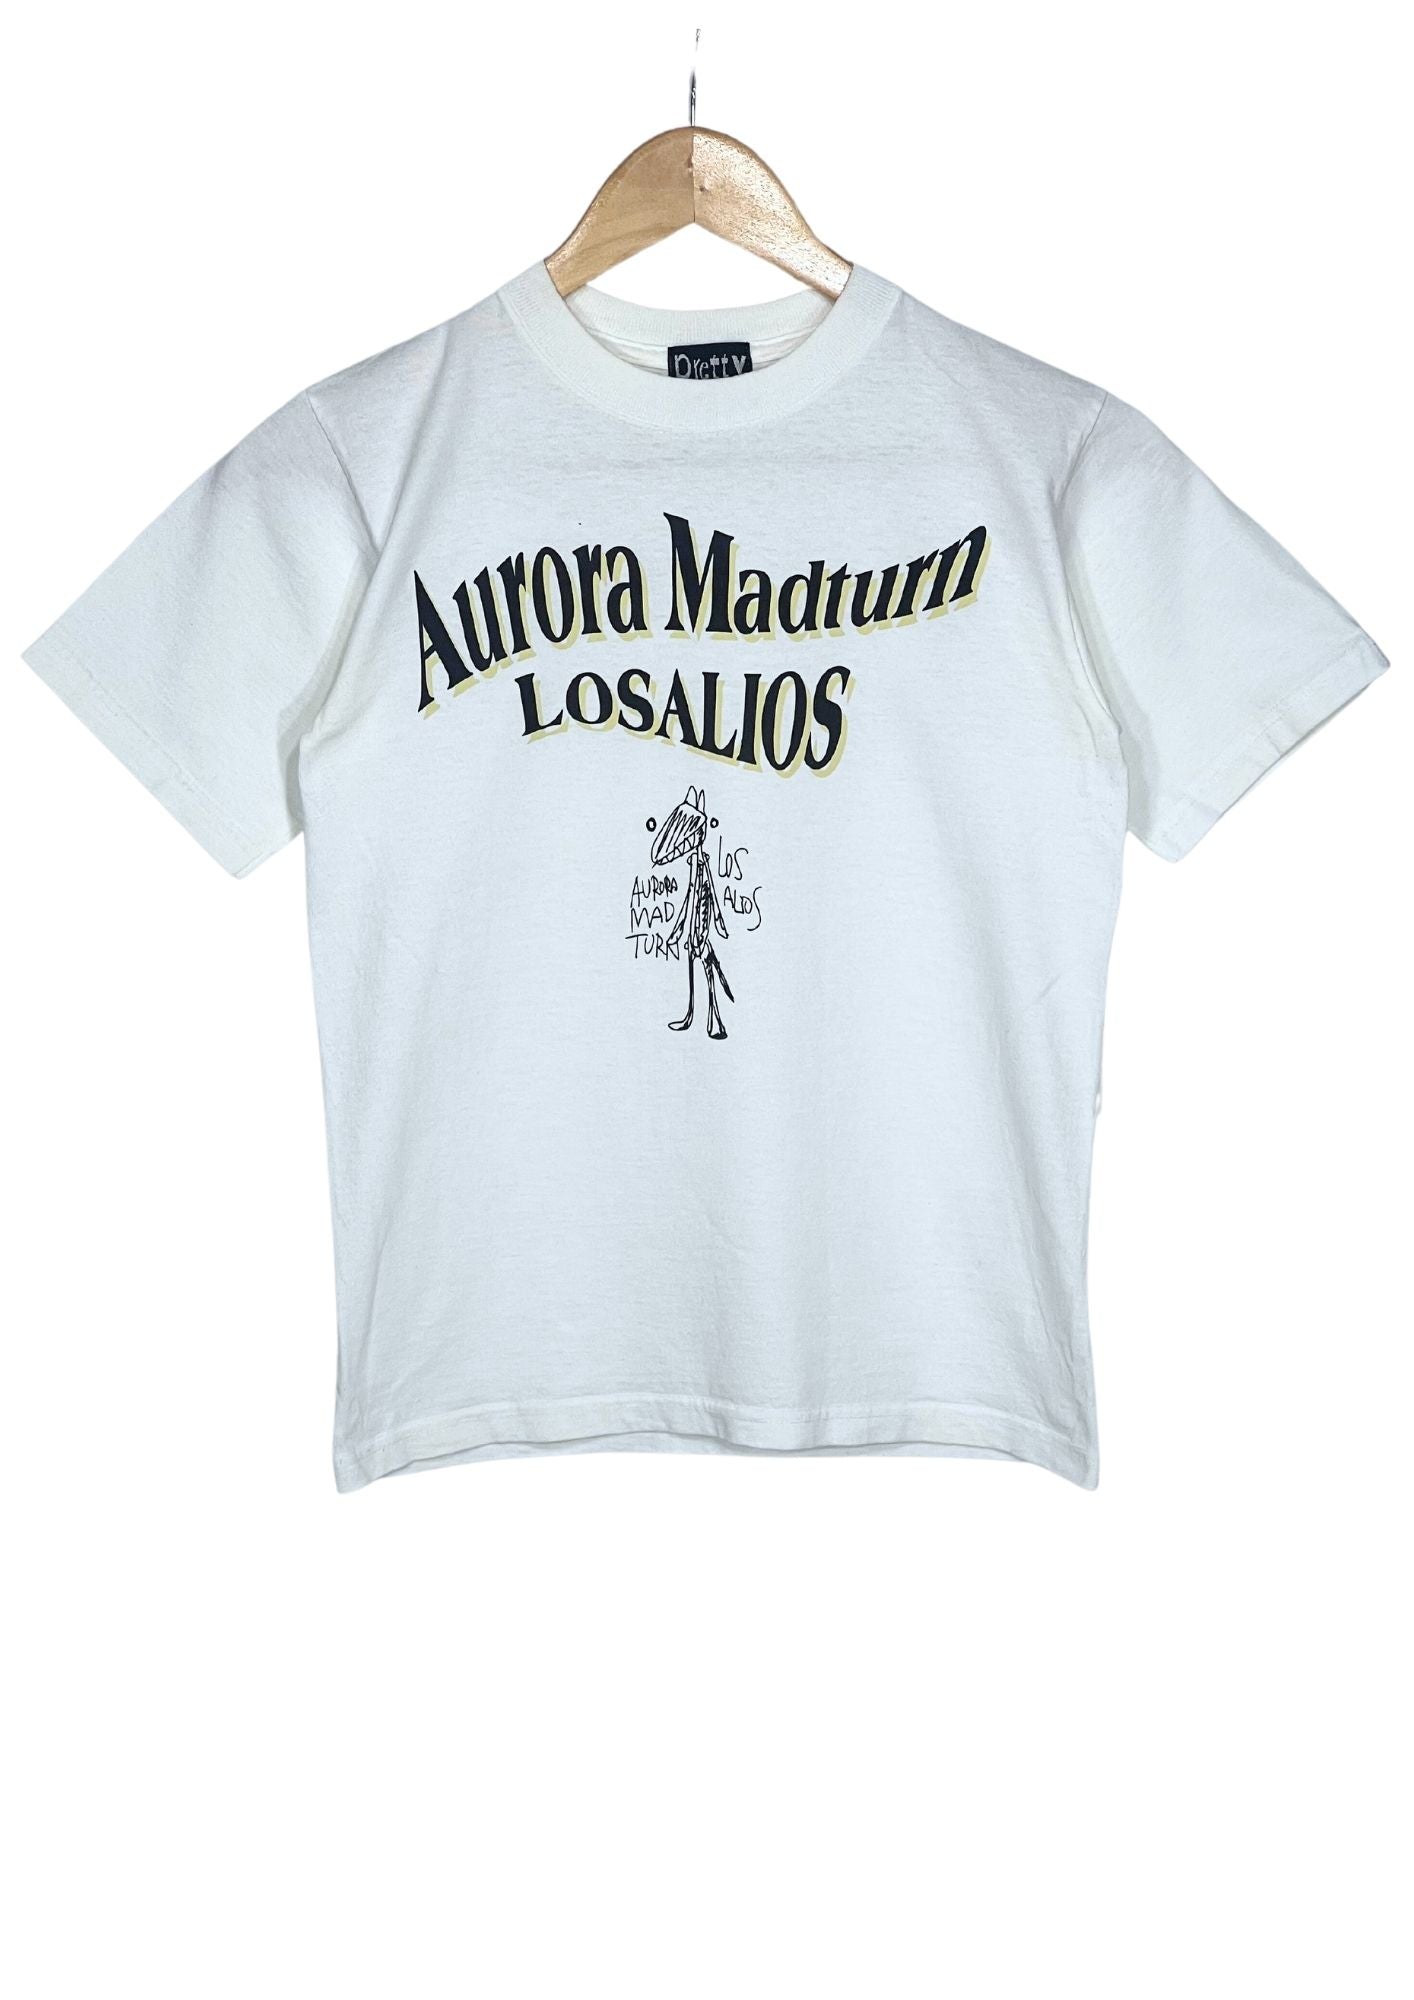 2000s LOSALIOS 'Aurora Madturn' Japanese Band T-shirt